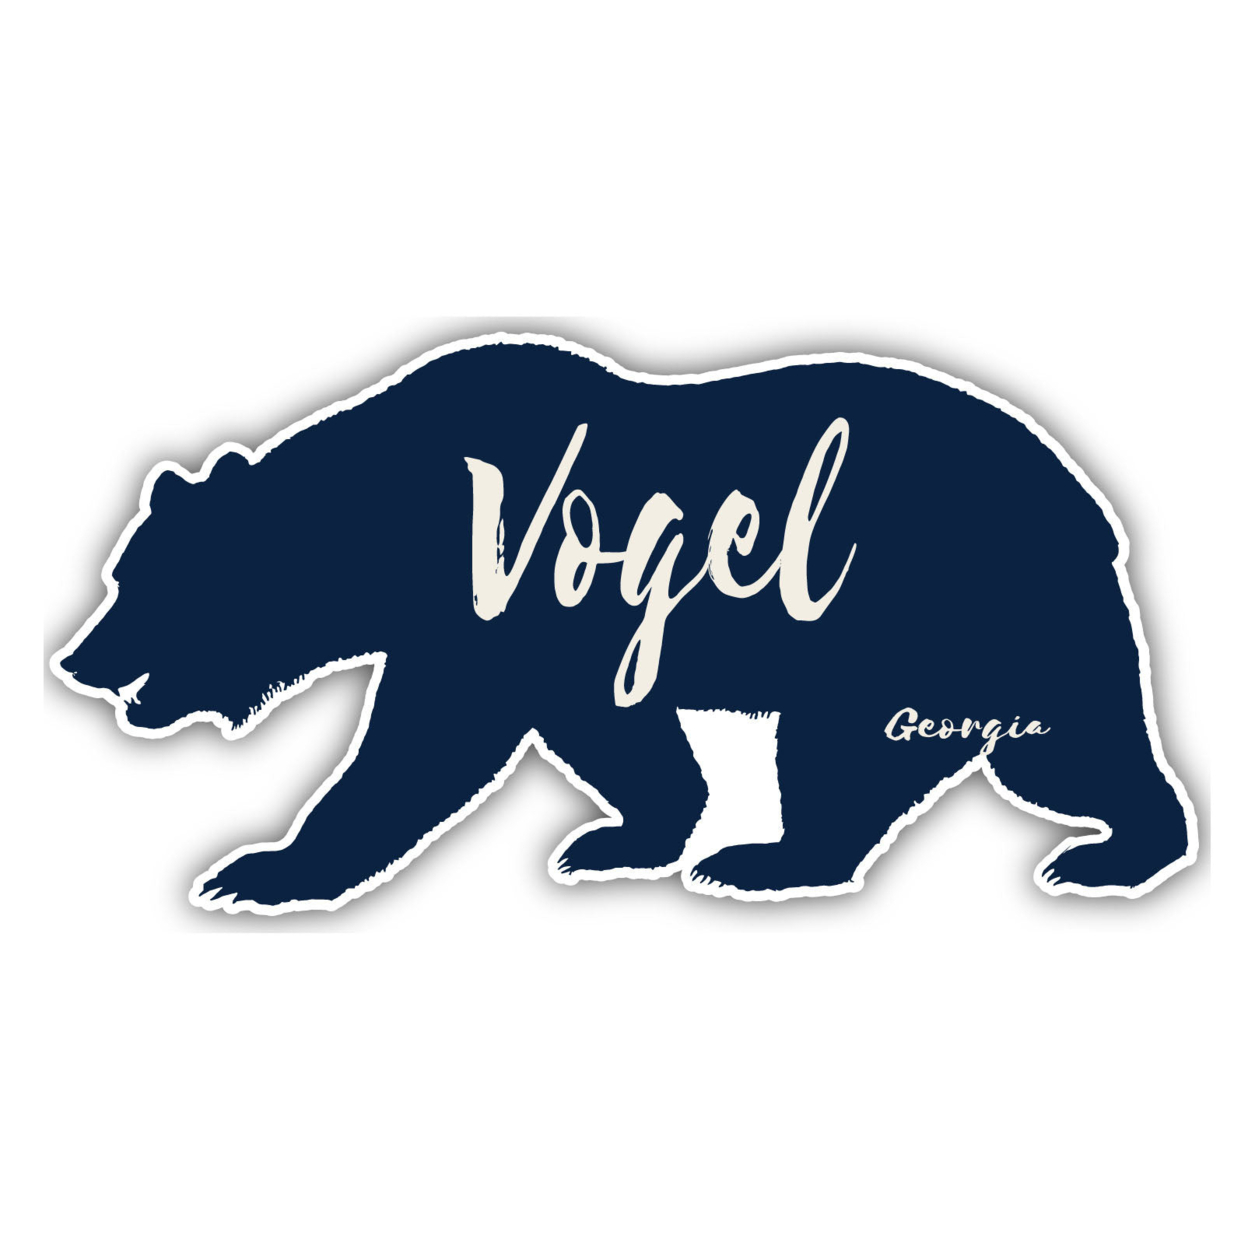 Vogel Georgia Souvenir Decorative Stickers (Choose Theme And Size) - Single Unit, 2-Inch, Bear